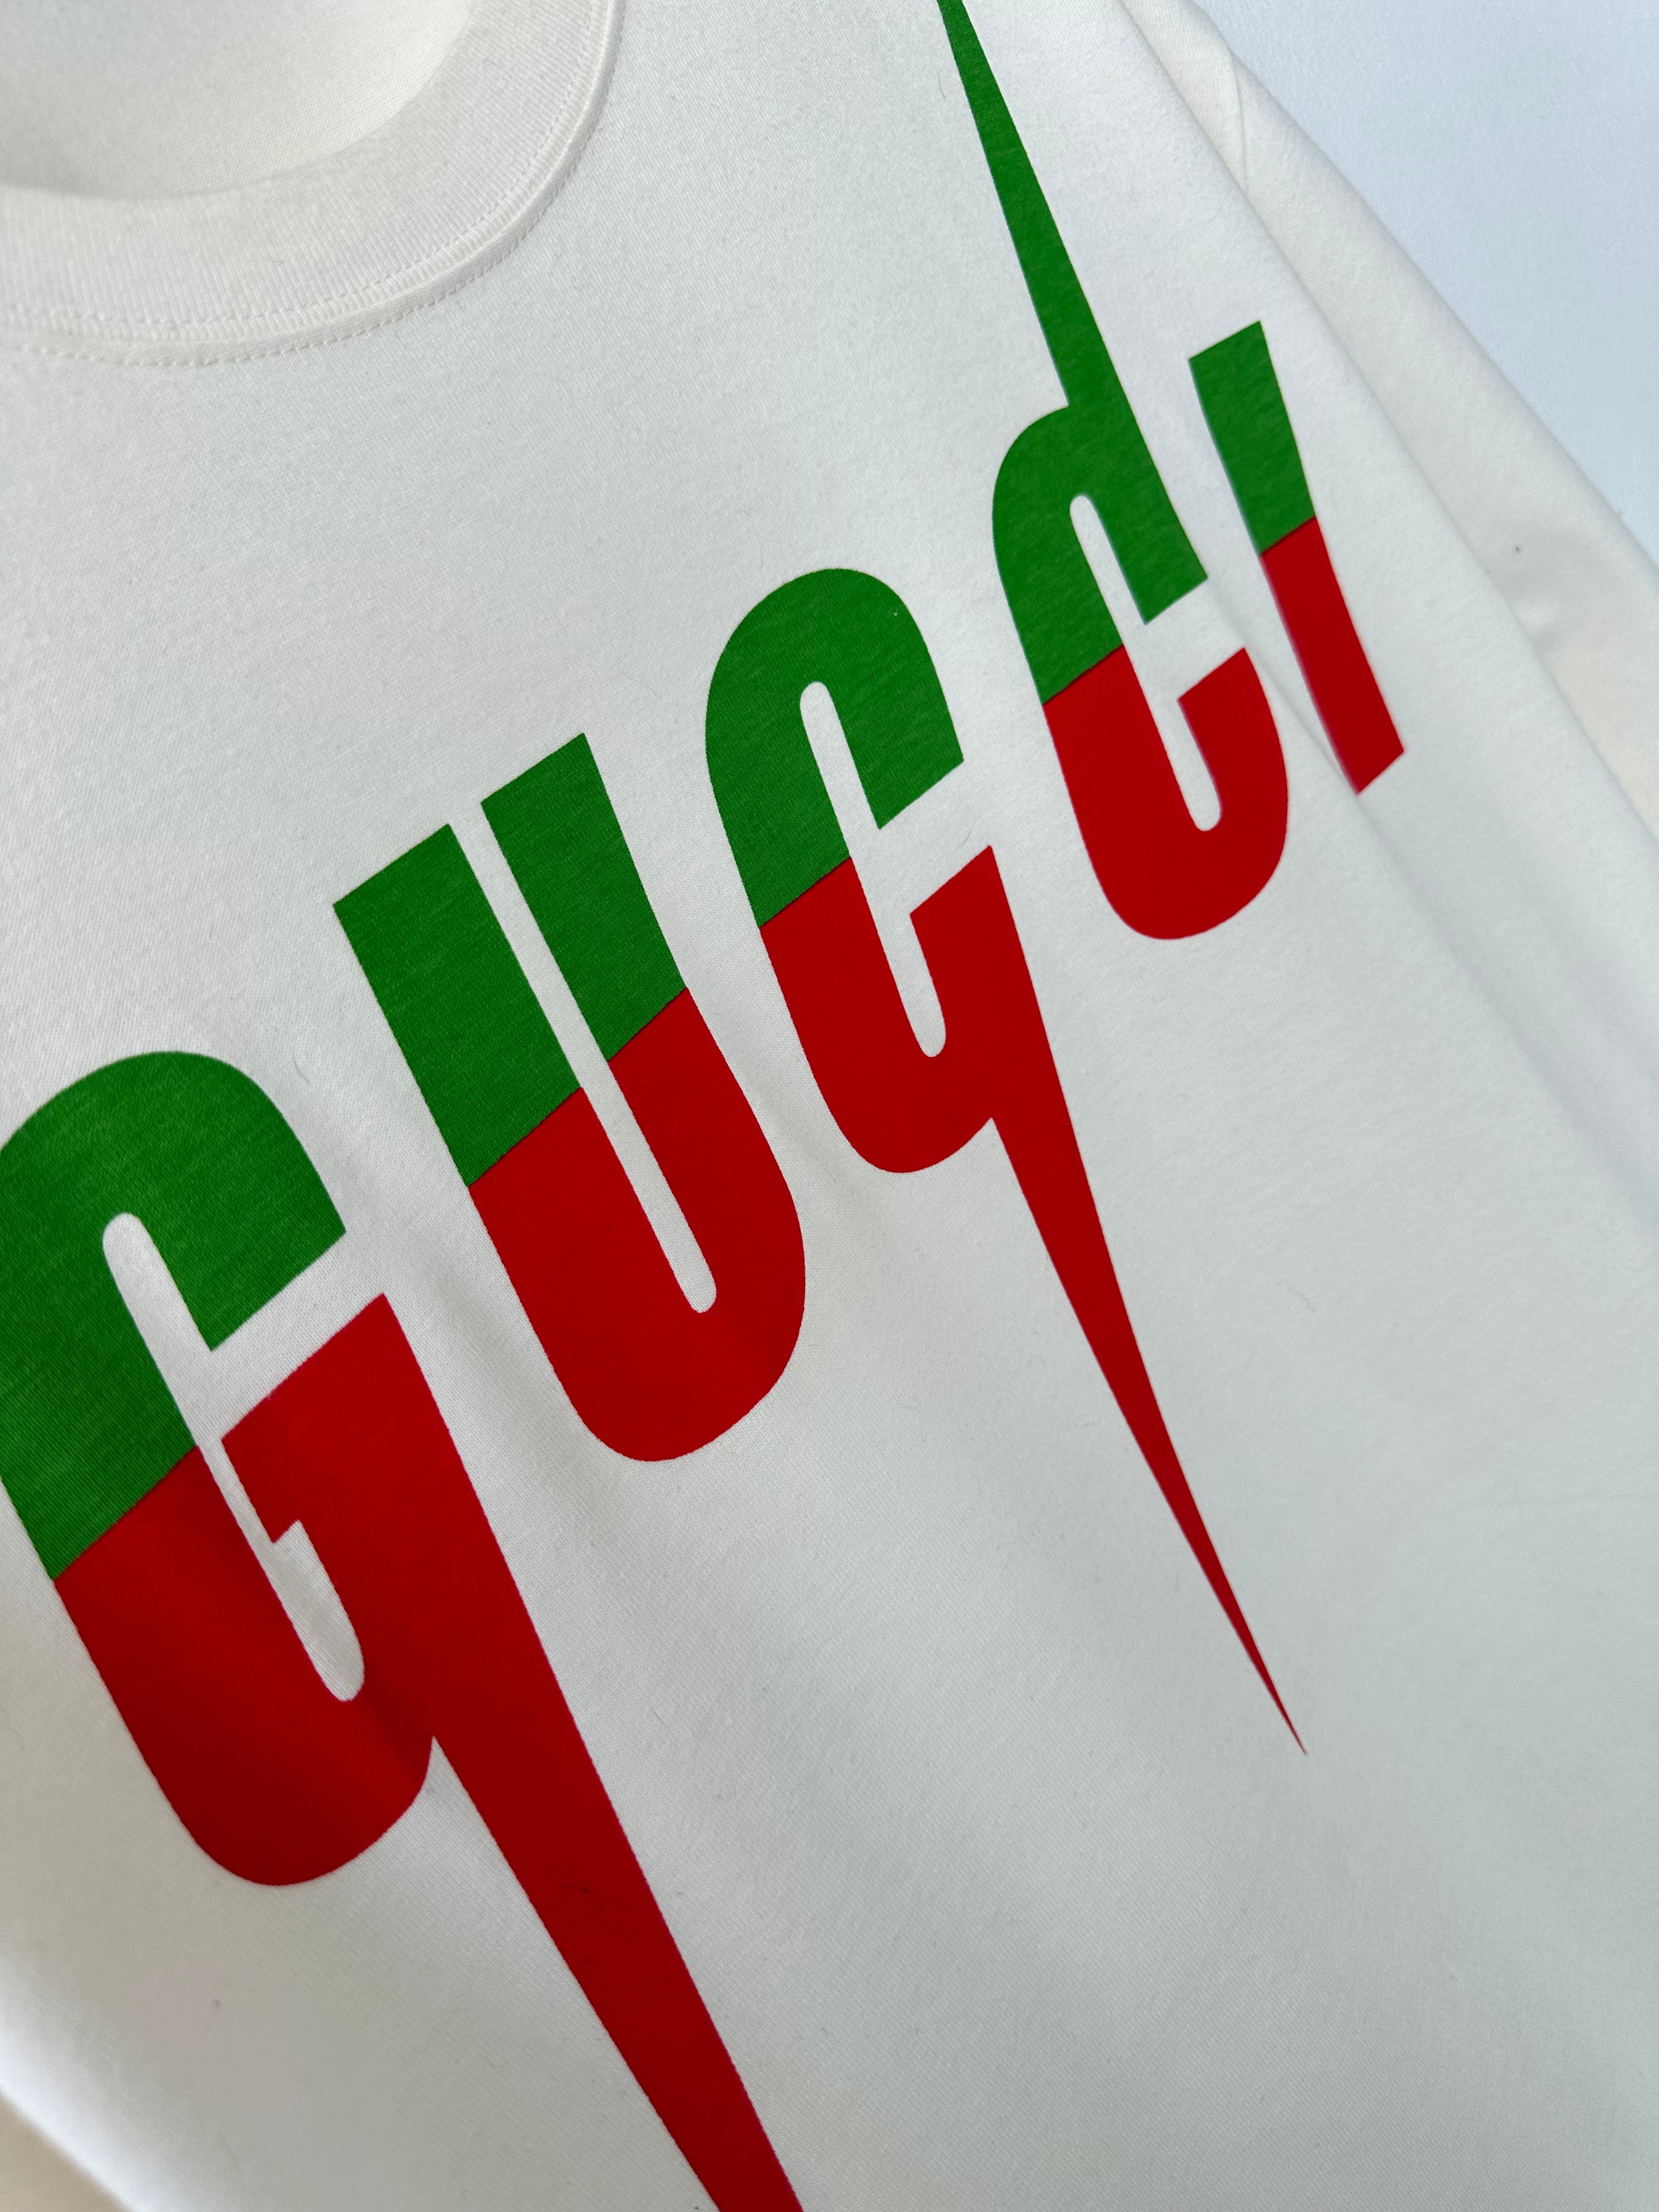 T-shirt Gucci Blade